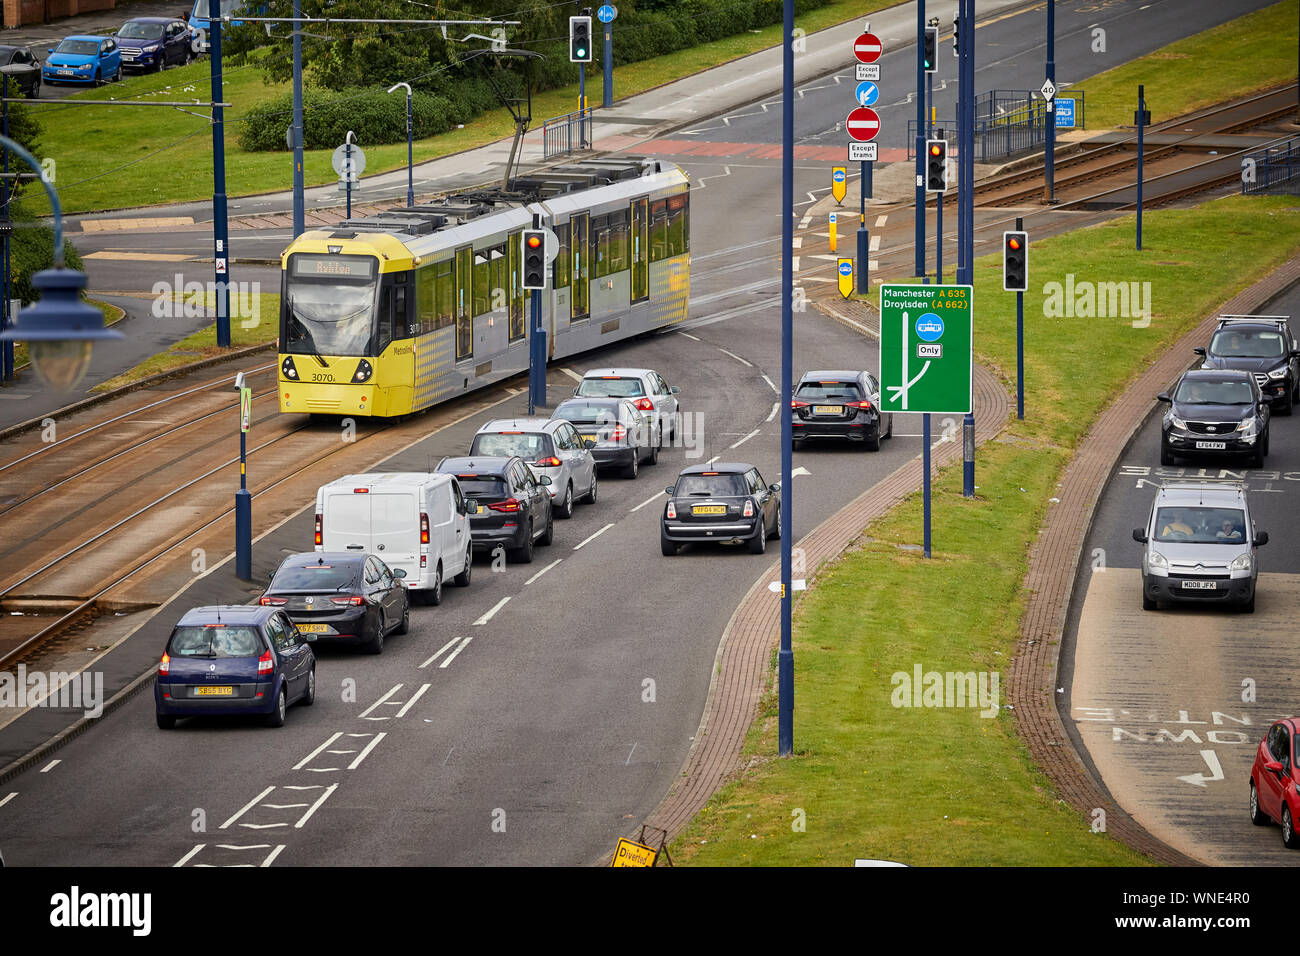 Metrolink tram lines crossing a road  in Ashton-under-Lyne Stock Photo